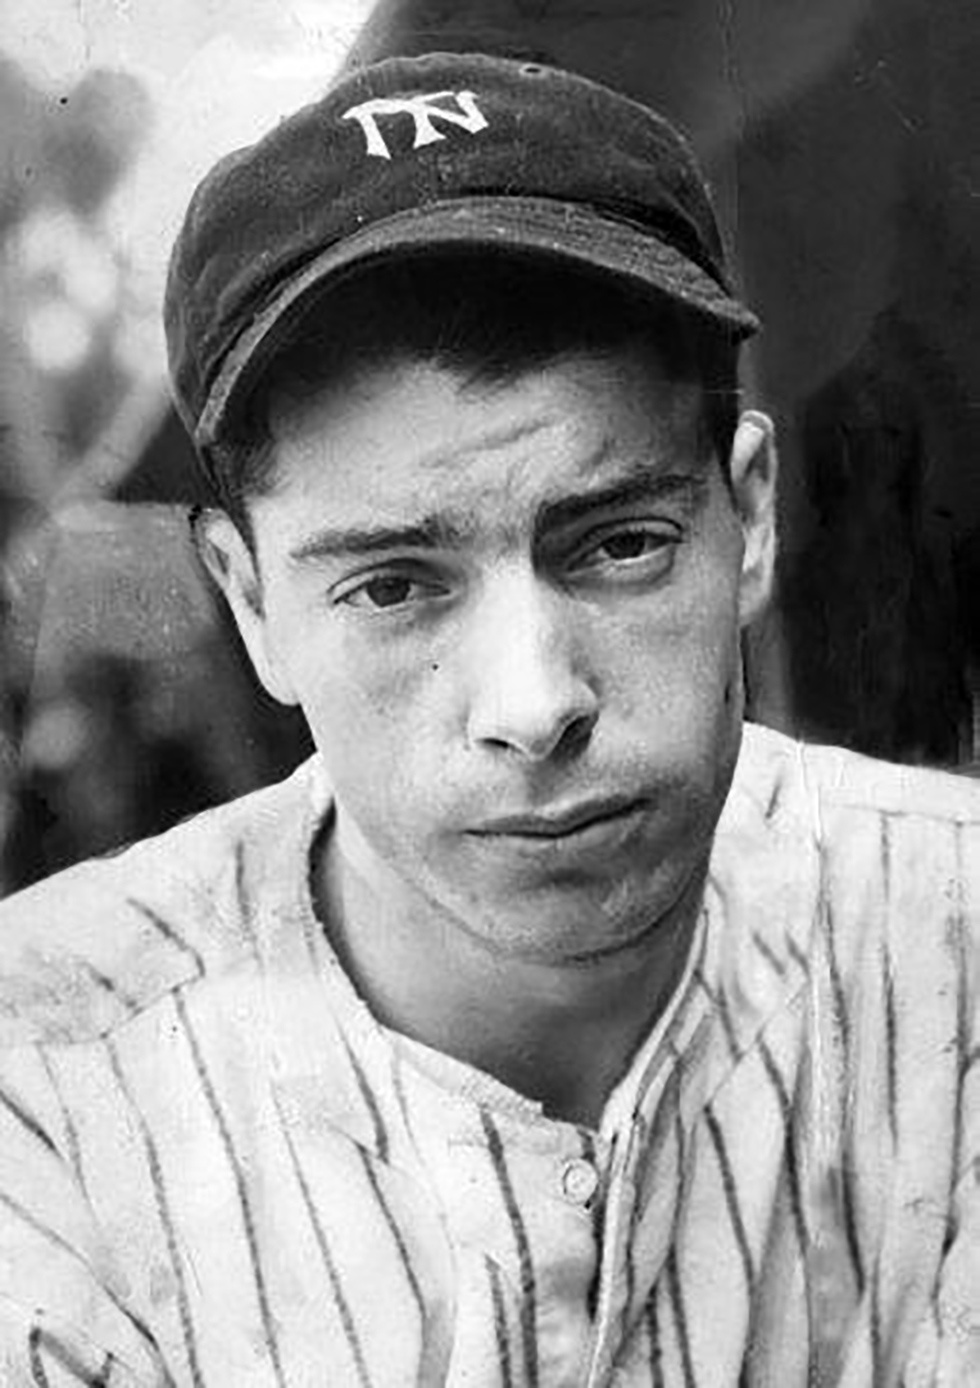 1933 Photo Documents 18-Year-Old Joe DiMaggio's Record Streak